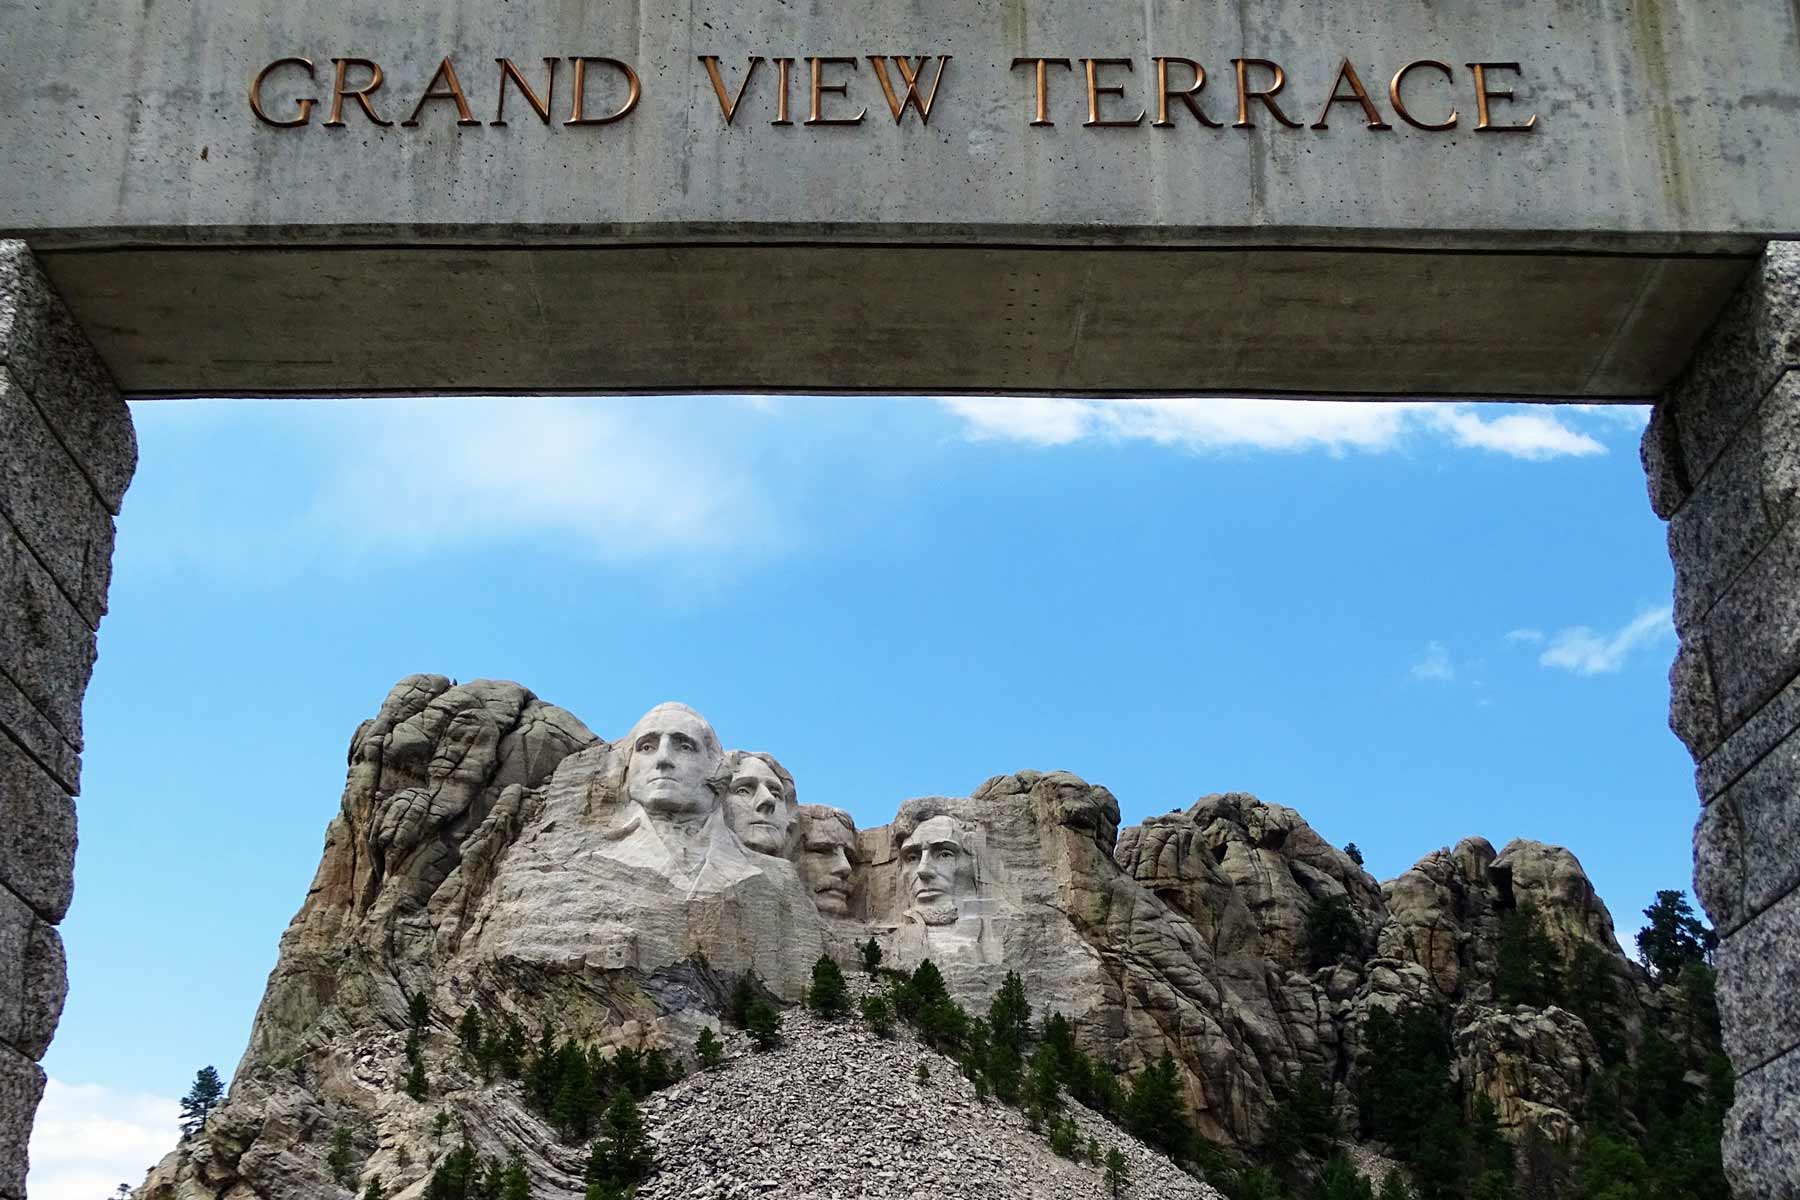 Grand View Terrace Mount Rushmore